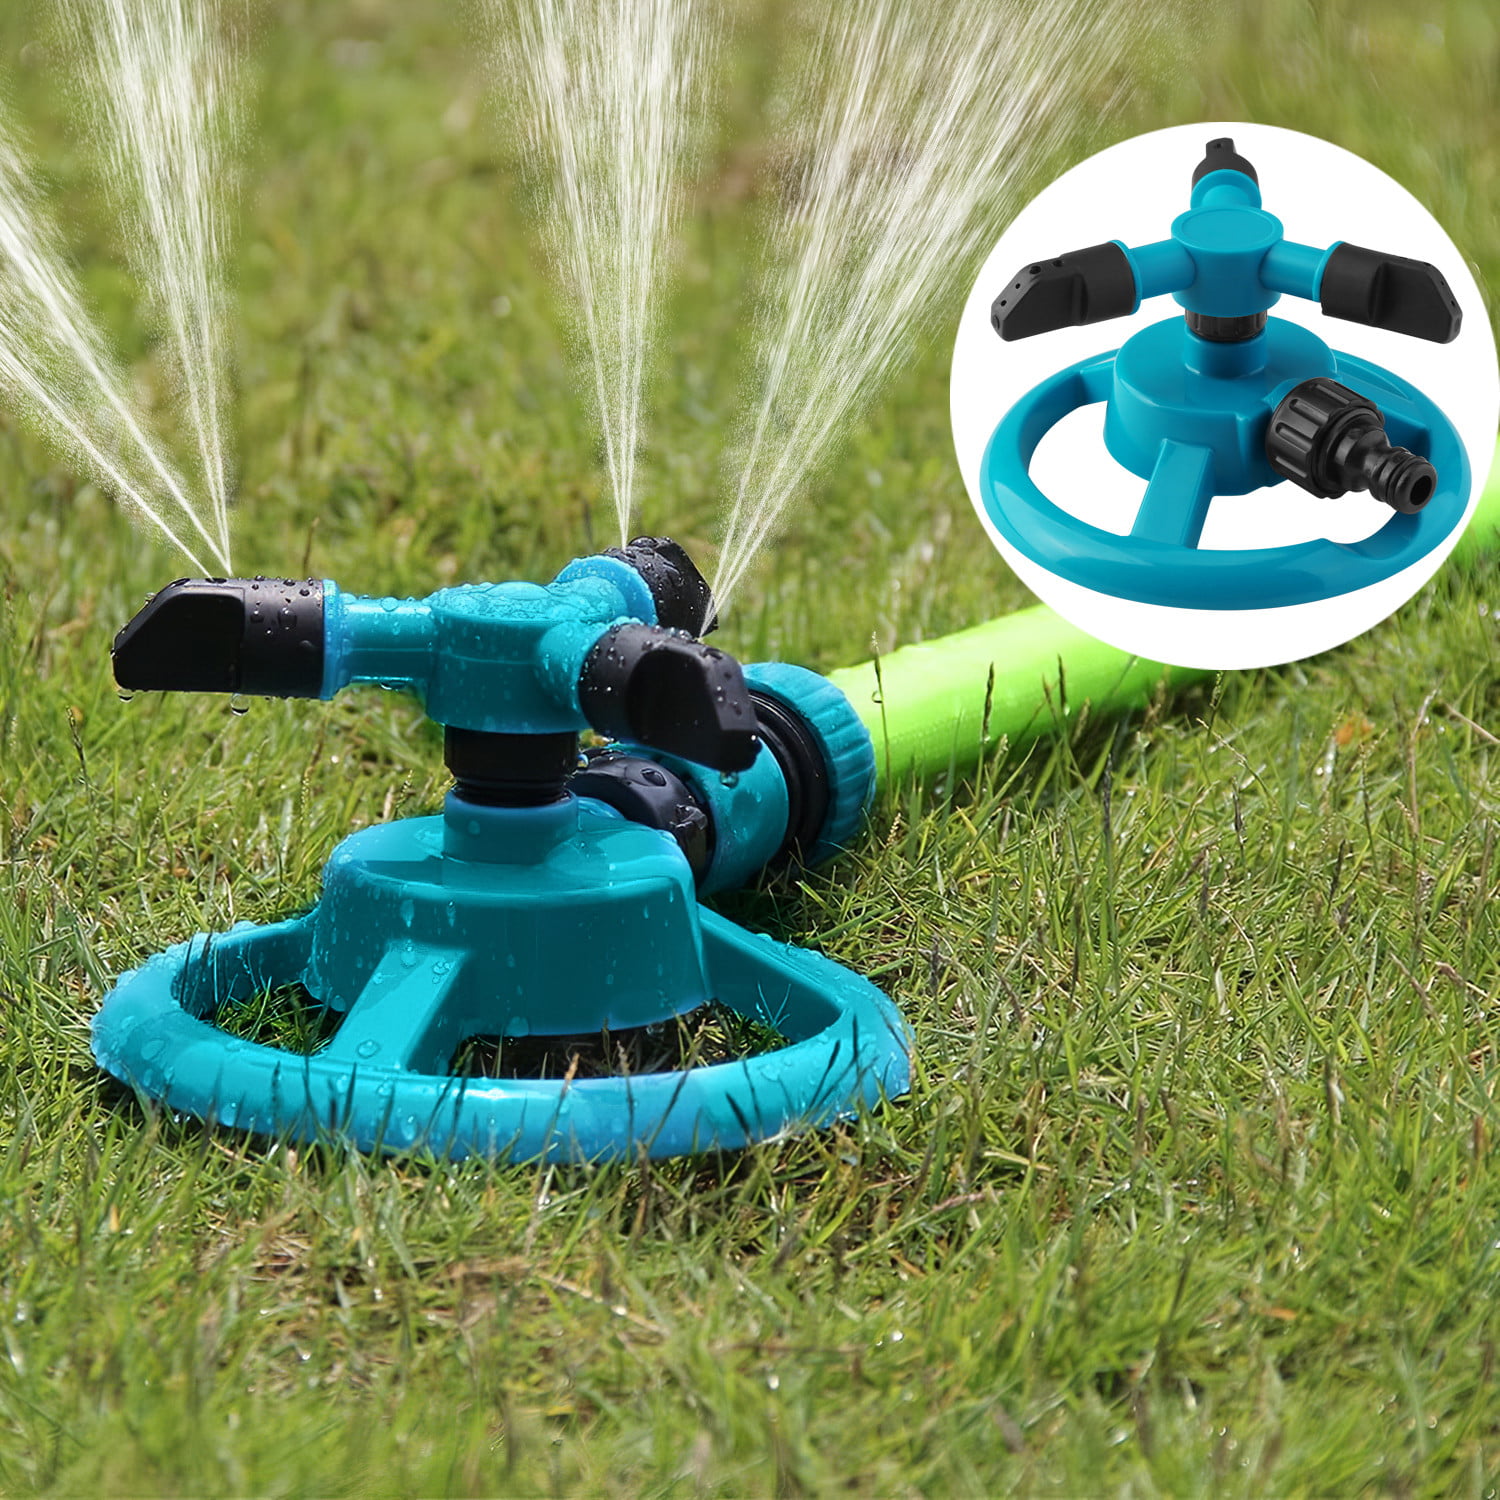 Details about   1-4pack Auto Garden Water Sprinkler Sprayer 360° Rotating Lawn Irrigation System 